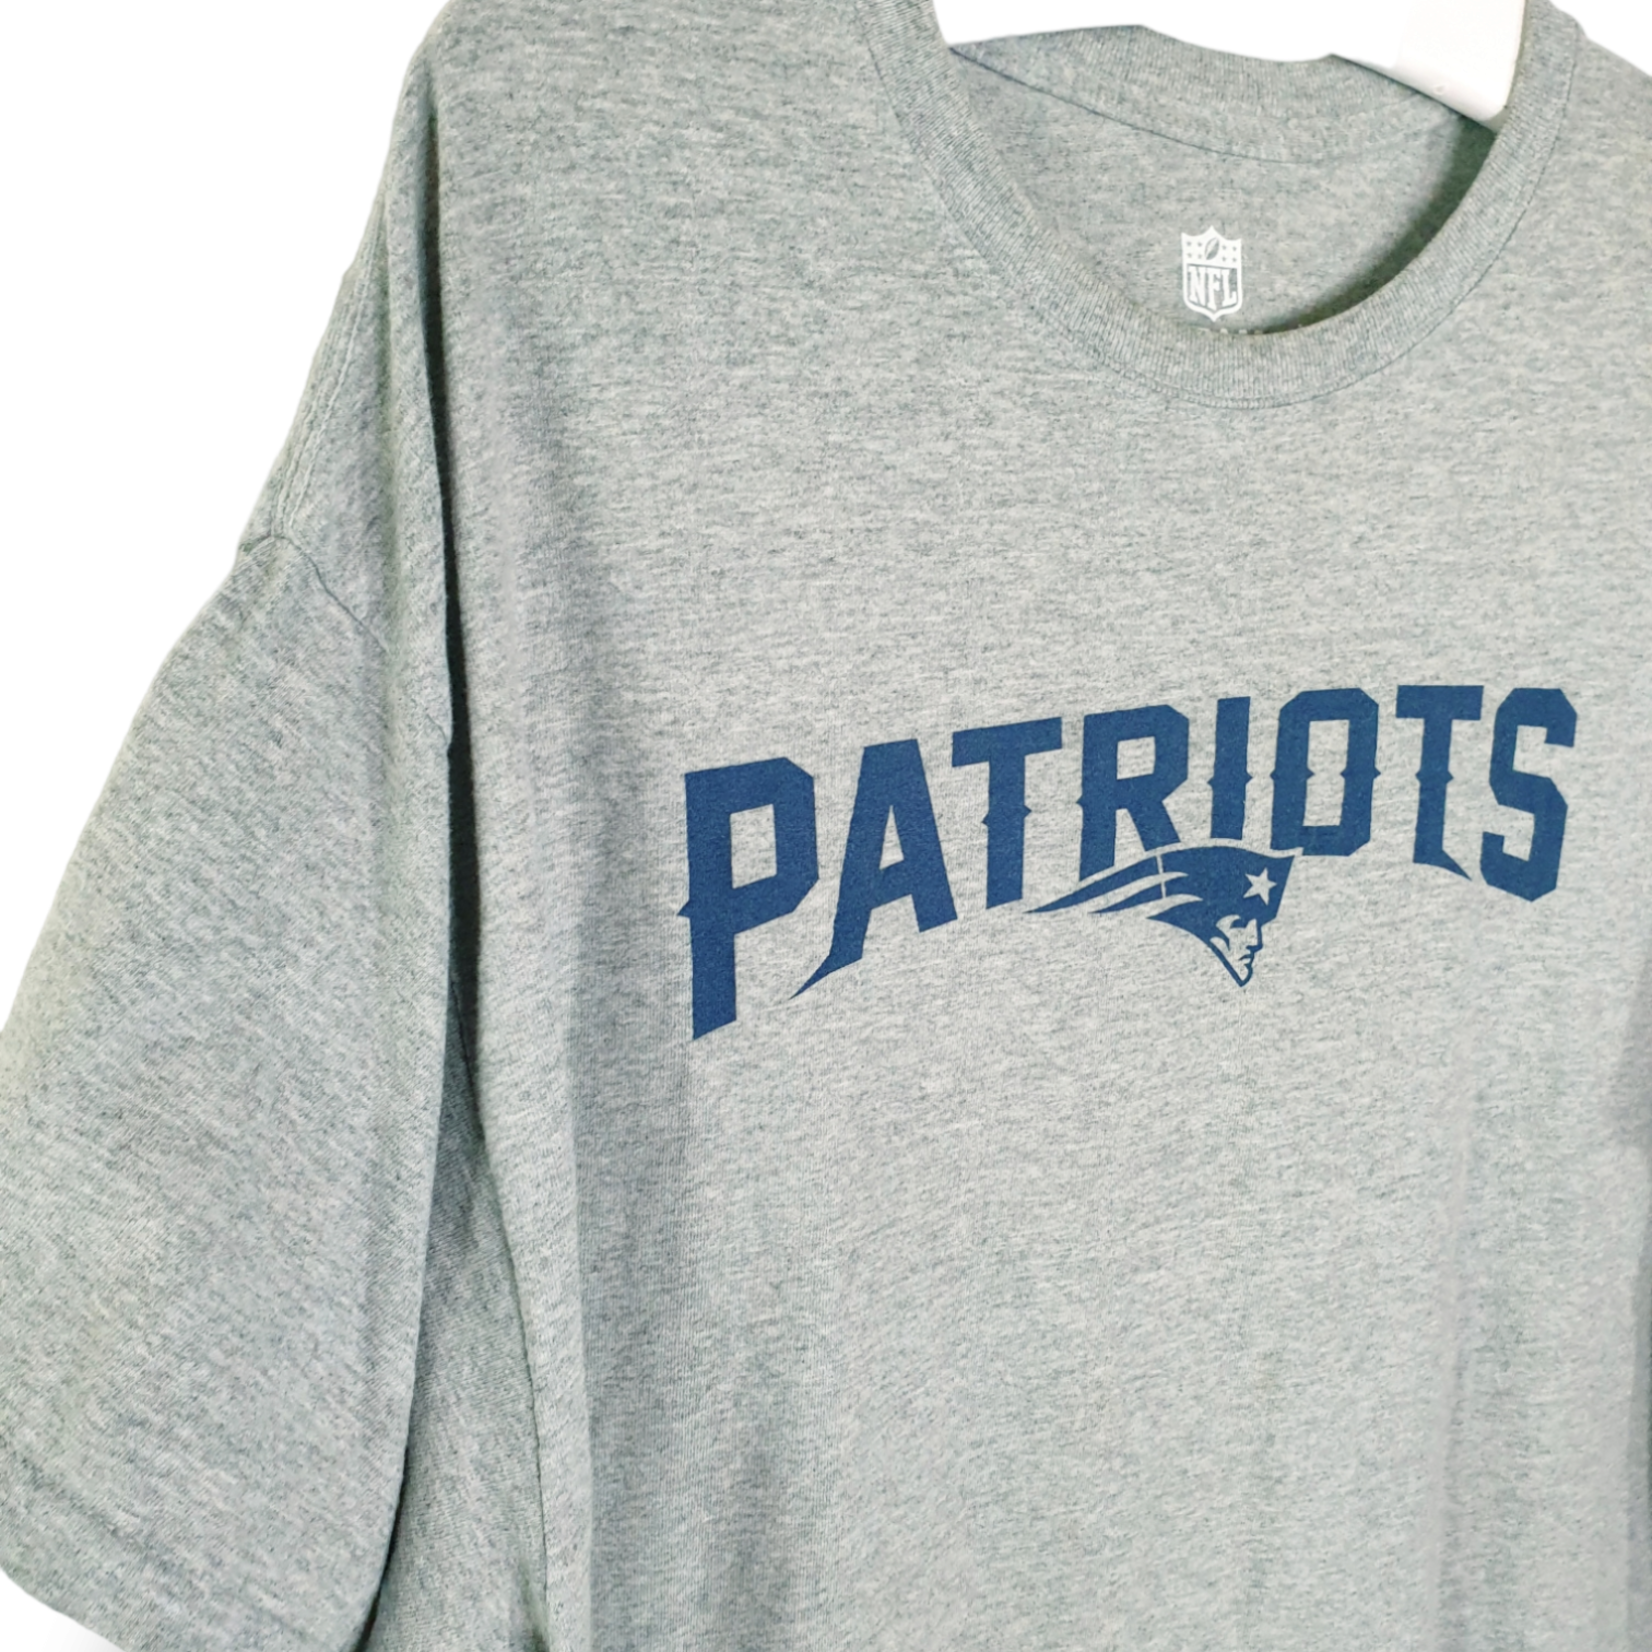 NFL Apparel Origineel NFL Team Apparel vintage t-shirt New England Patriots